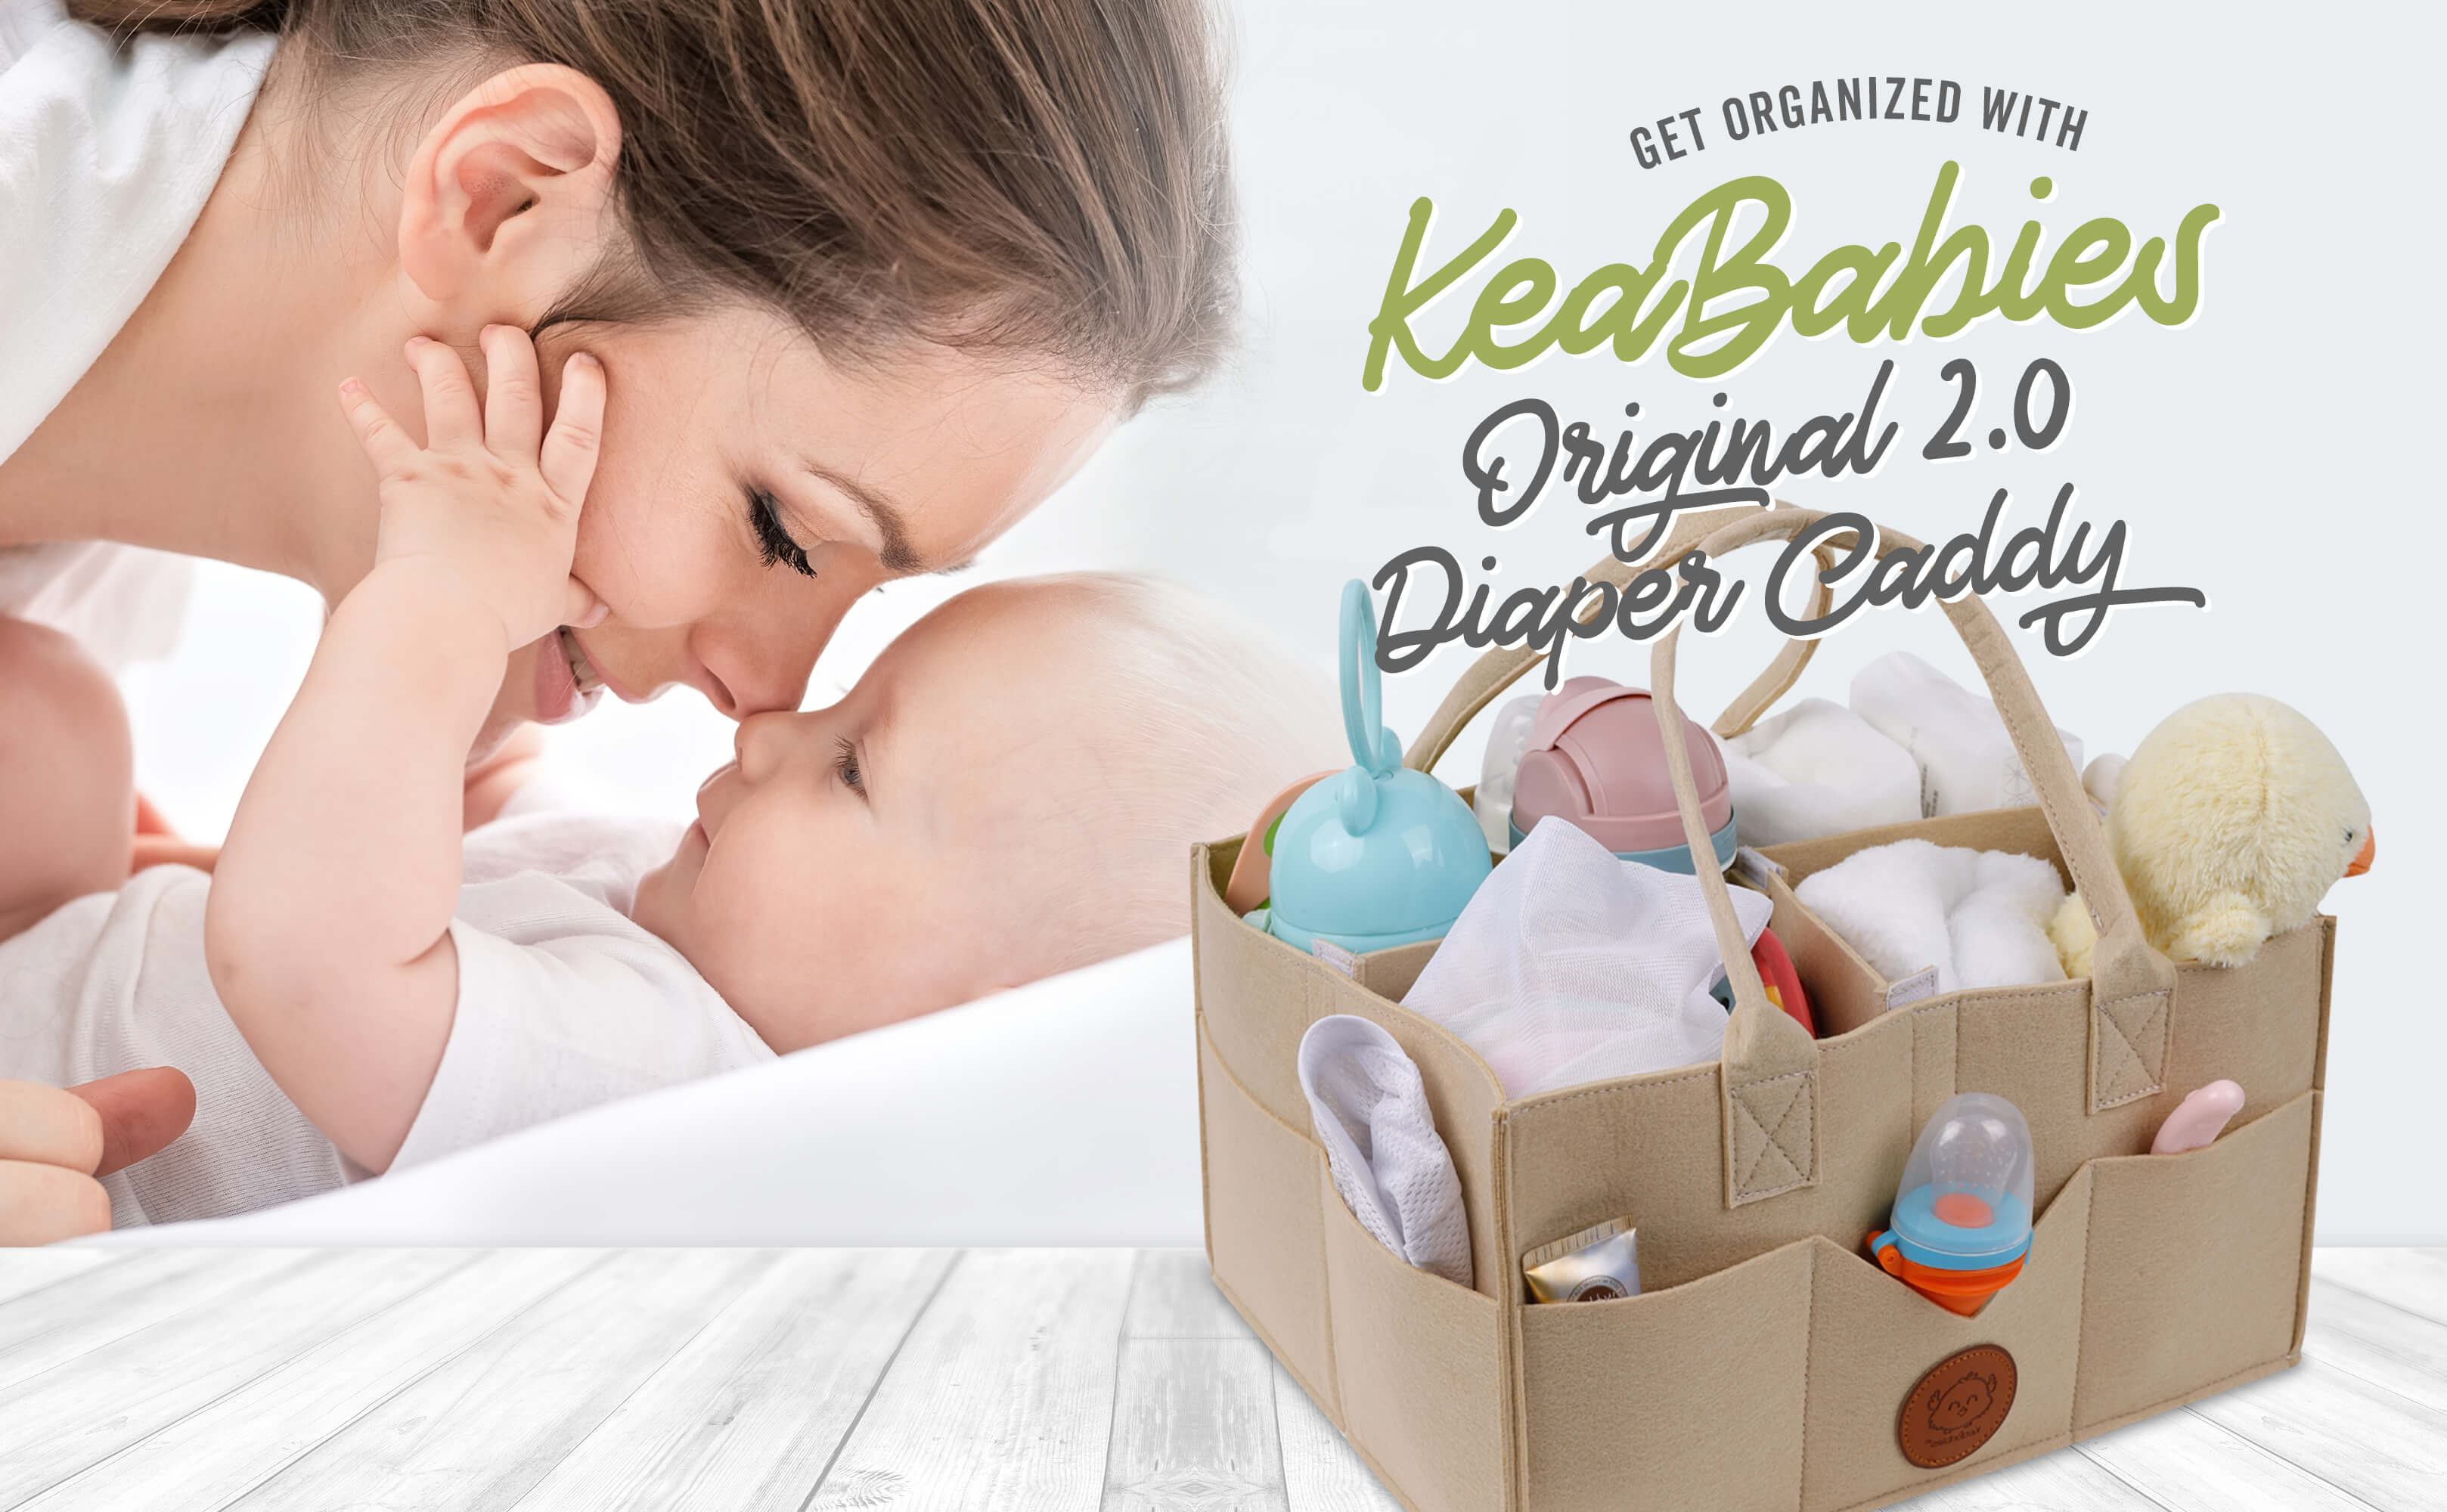 Simply the Best: KeaBabies Original 2.0 Diaper Caddy